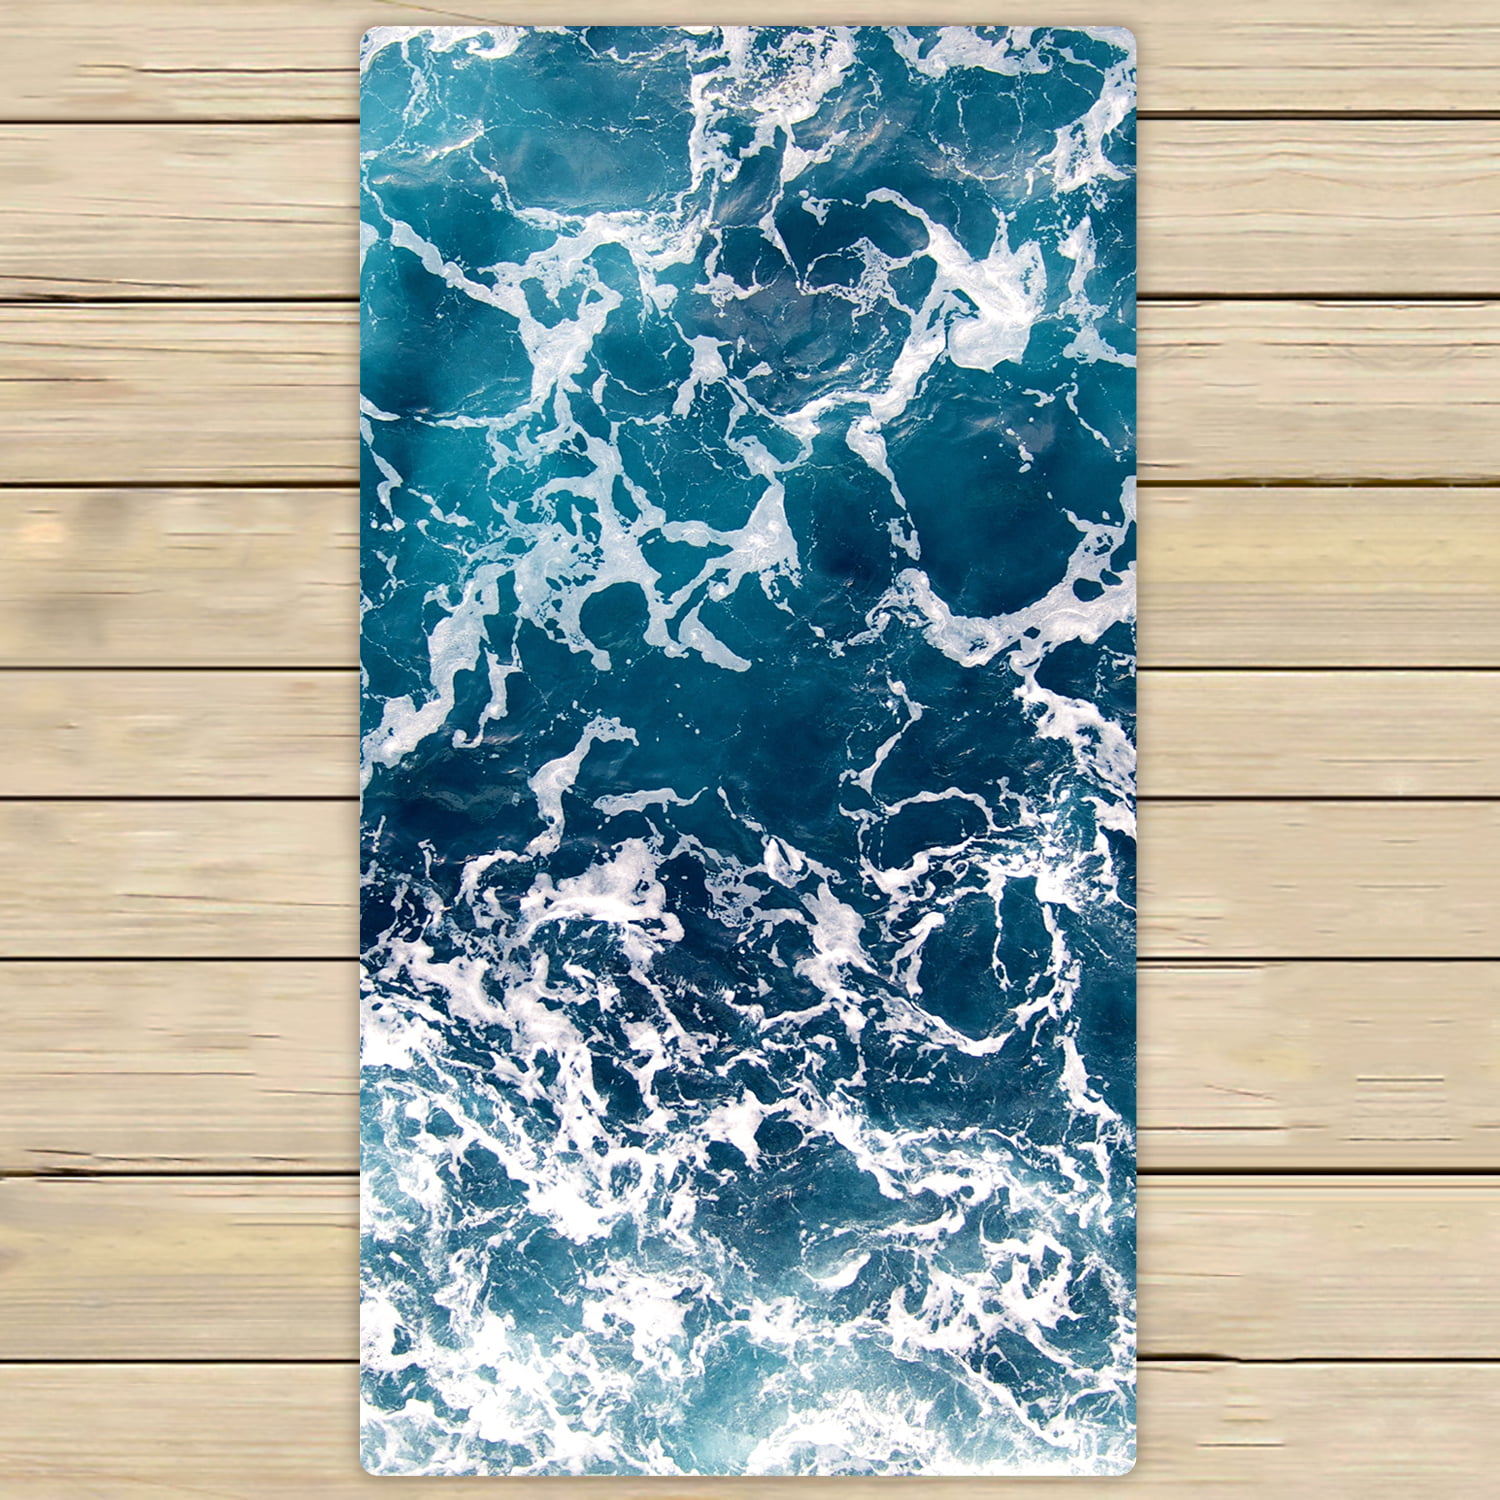 YKCG Ocean Dancing Waves Blue Sea Seascape Hand Towel Beach Towels Bath ...